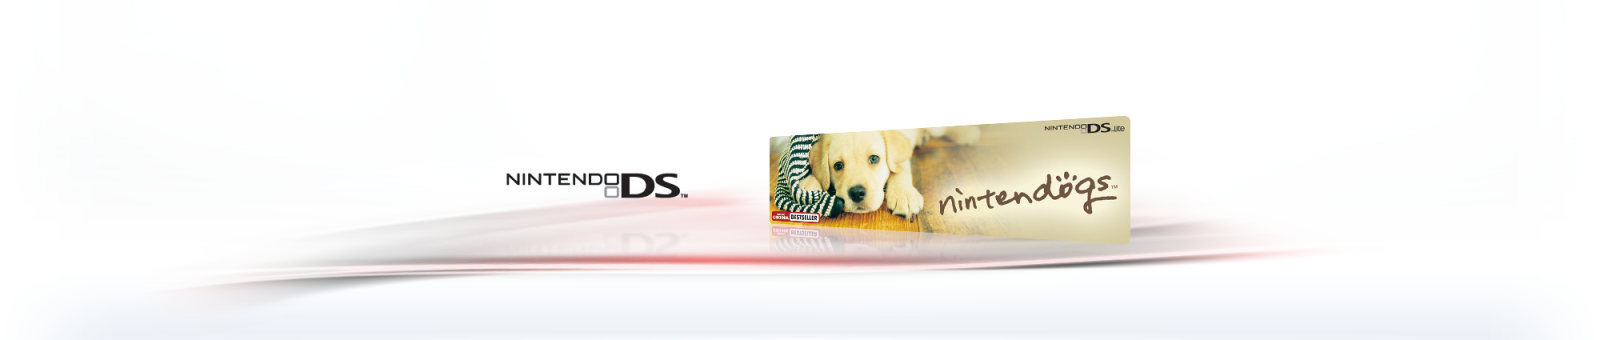 Nintendogs - Chihuahua & vrienden